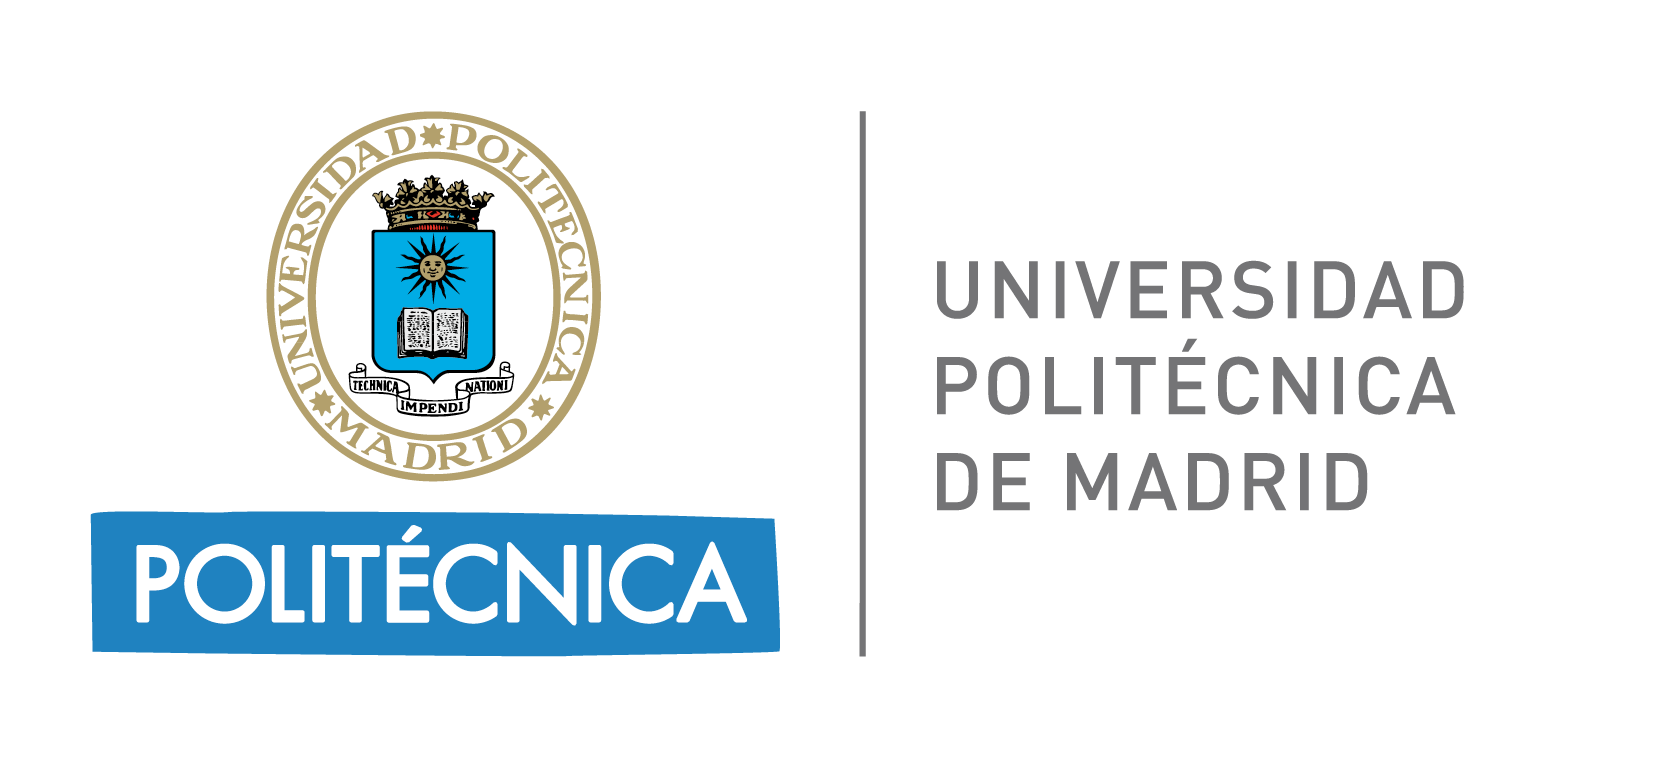 UNIVERSIDAD POLITÉCNICA MADRID